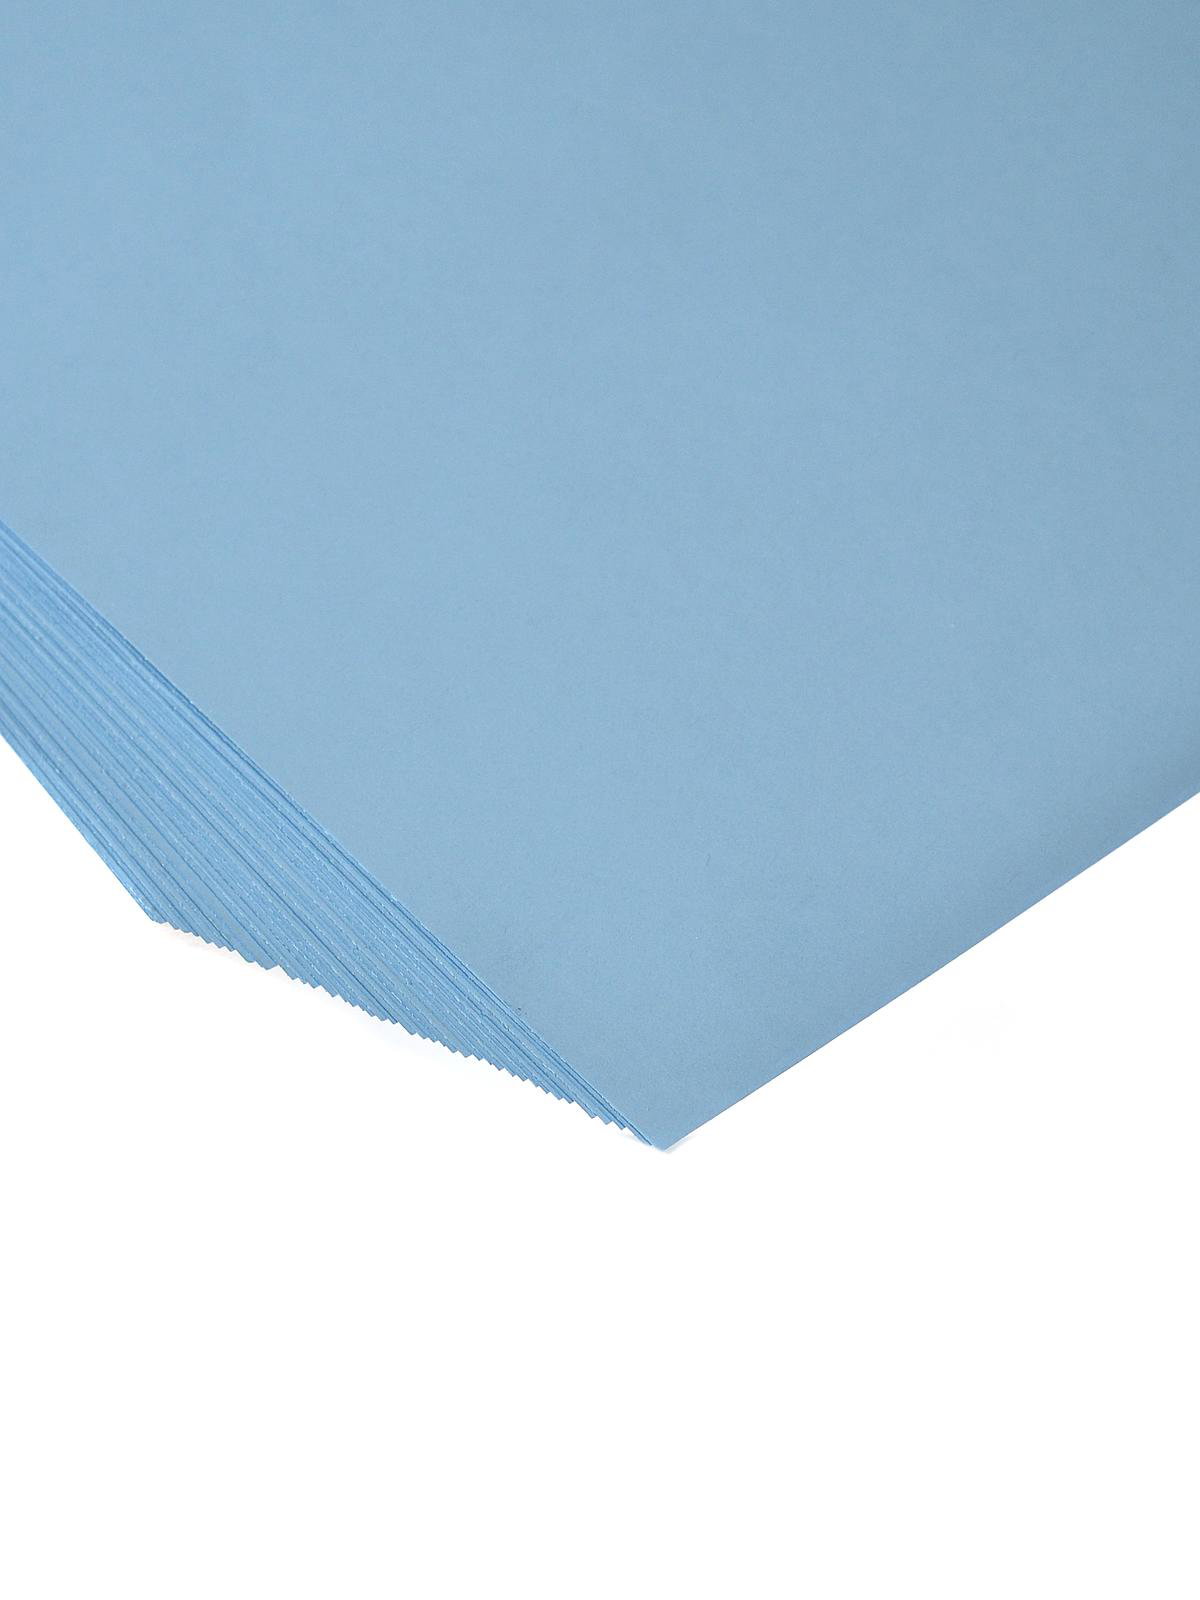 Tru-Ray Sulphite Construction Paper, 18 x 24, Sky Blue